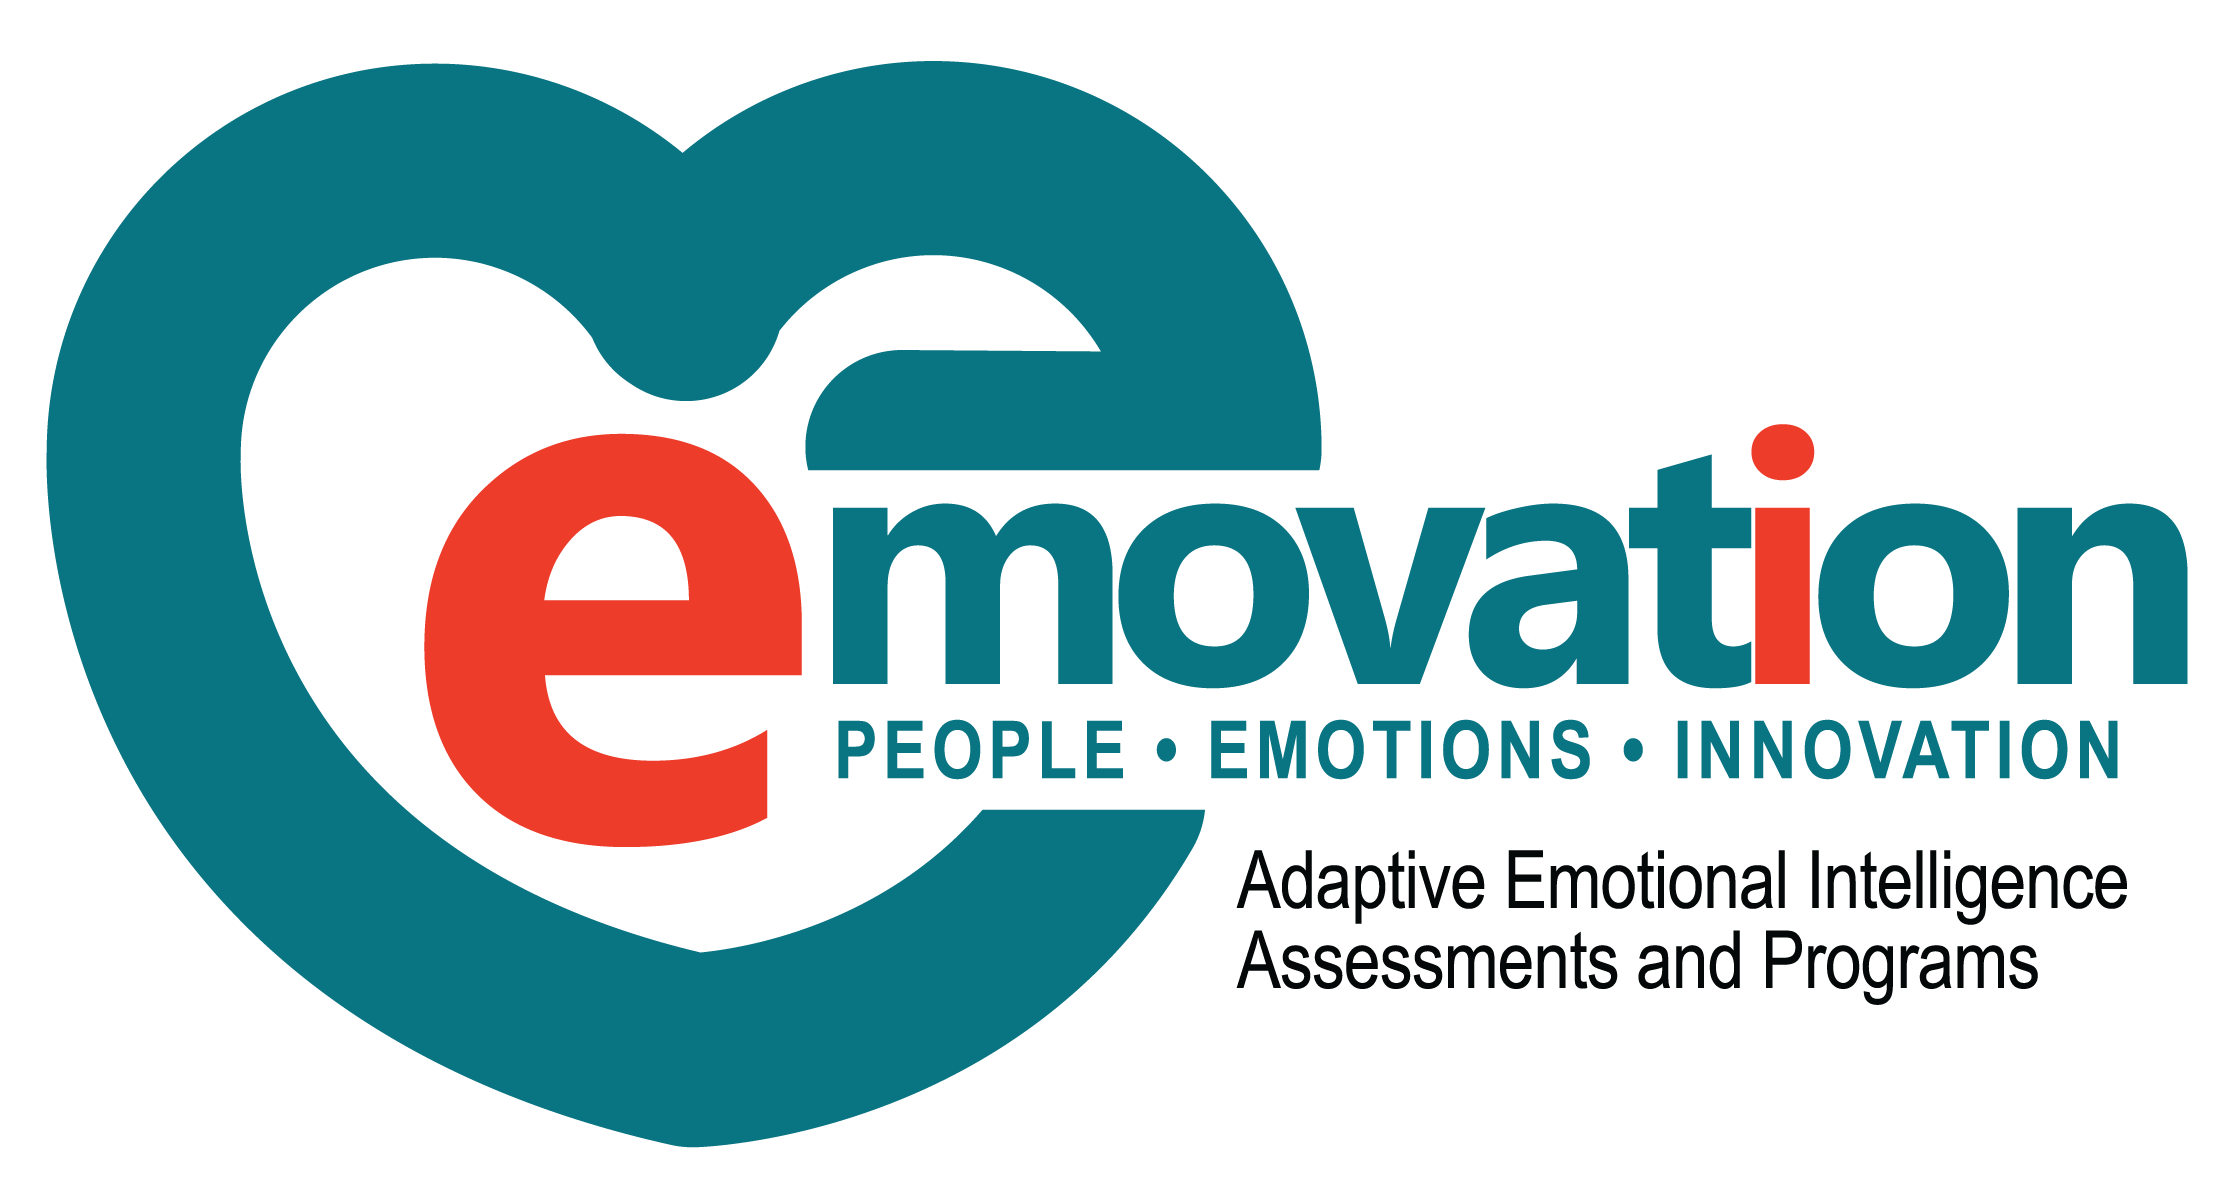 Emovation logo